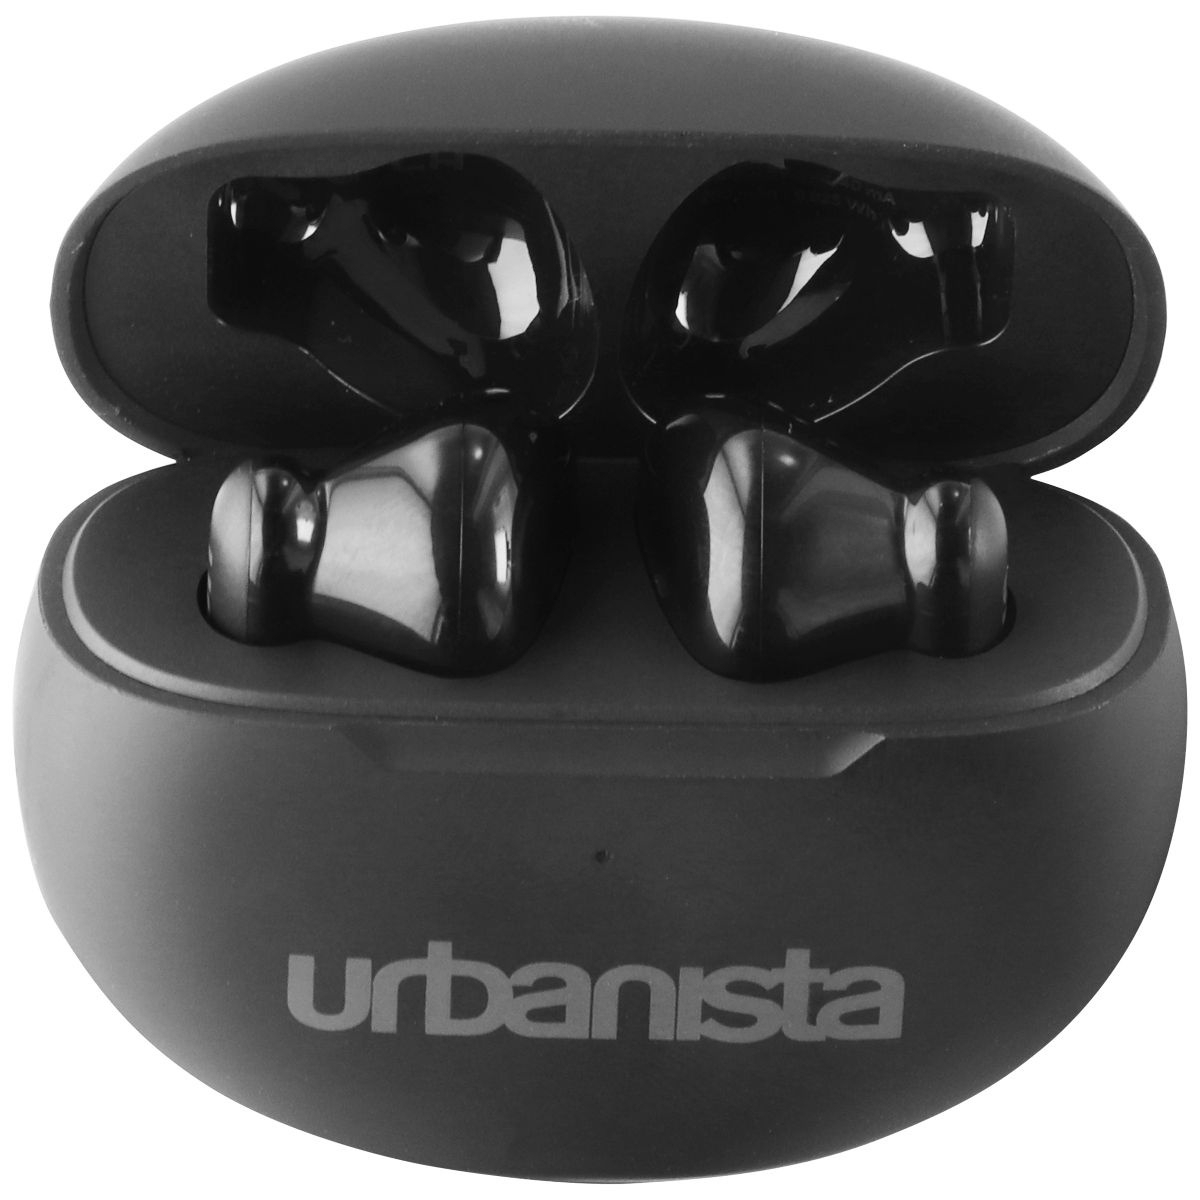 Urbanista Austin True Wireless Earbuds With Built-In Microphone - Midnight Black